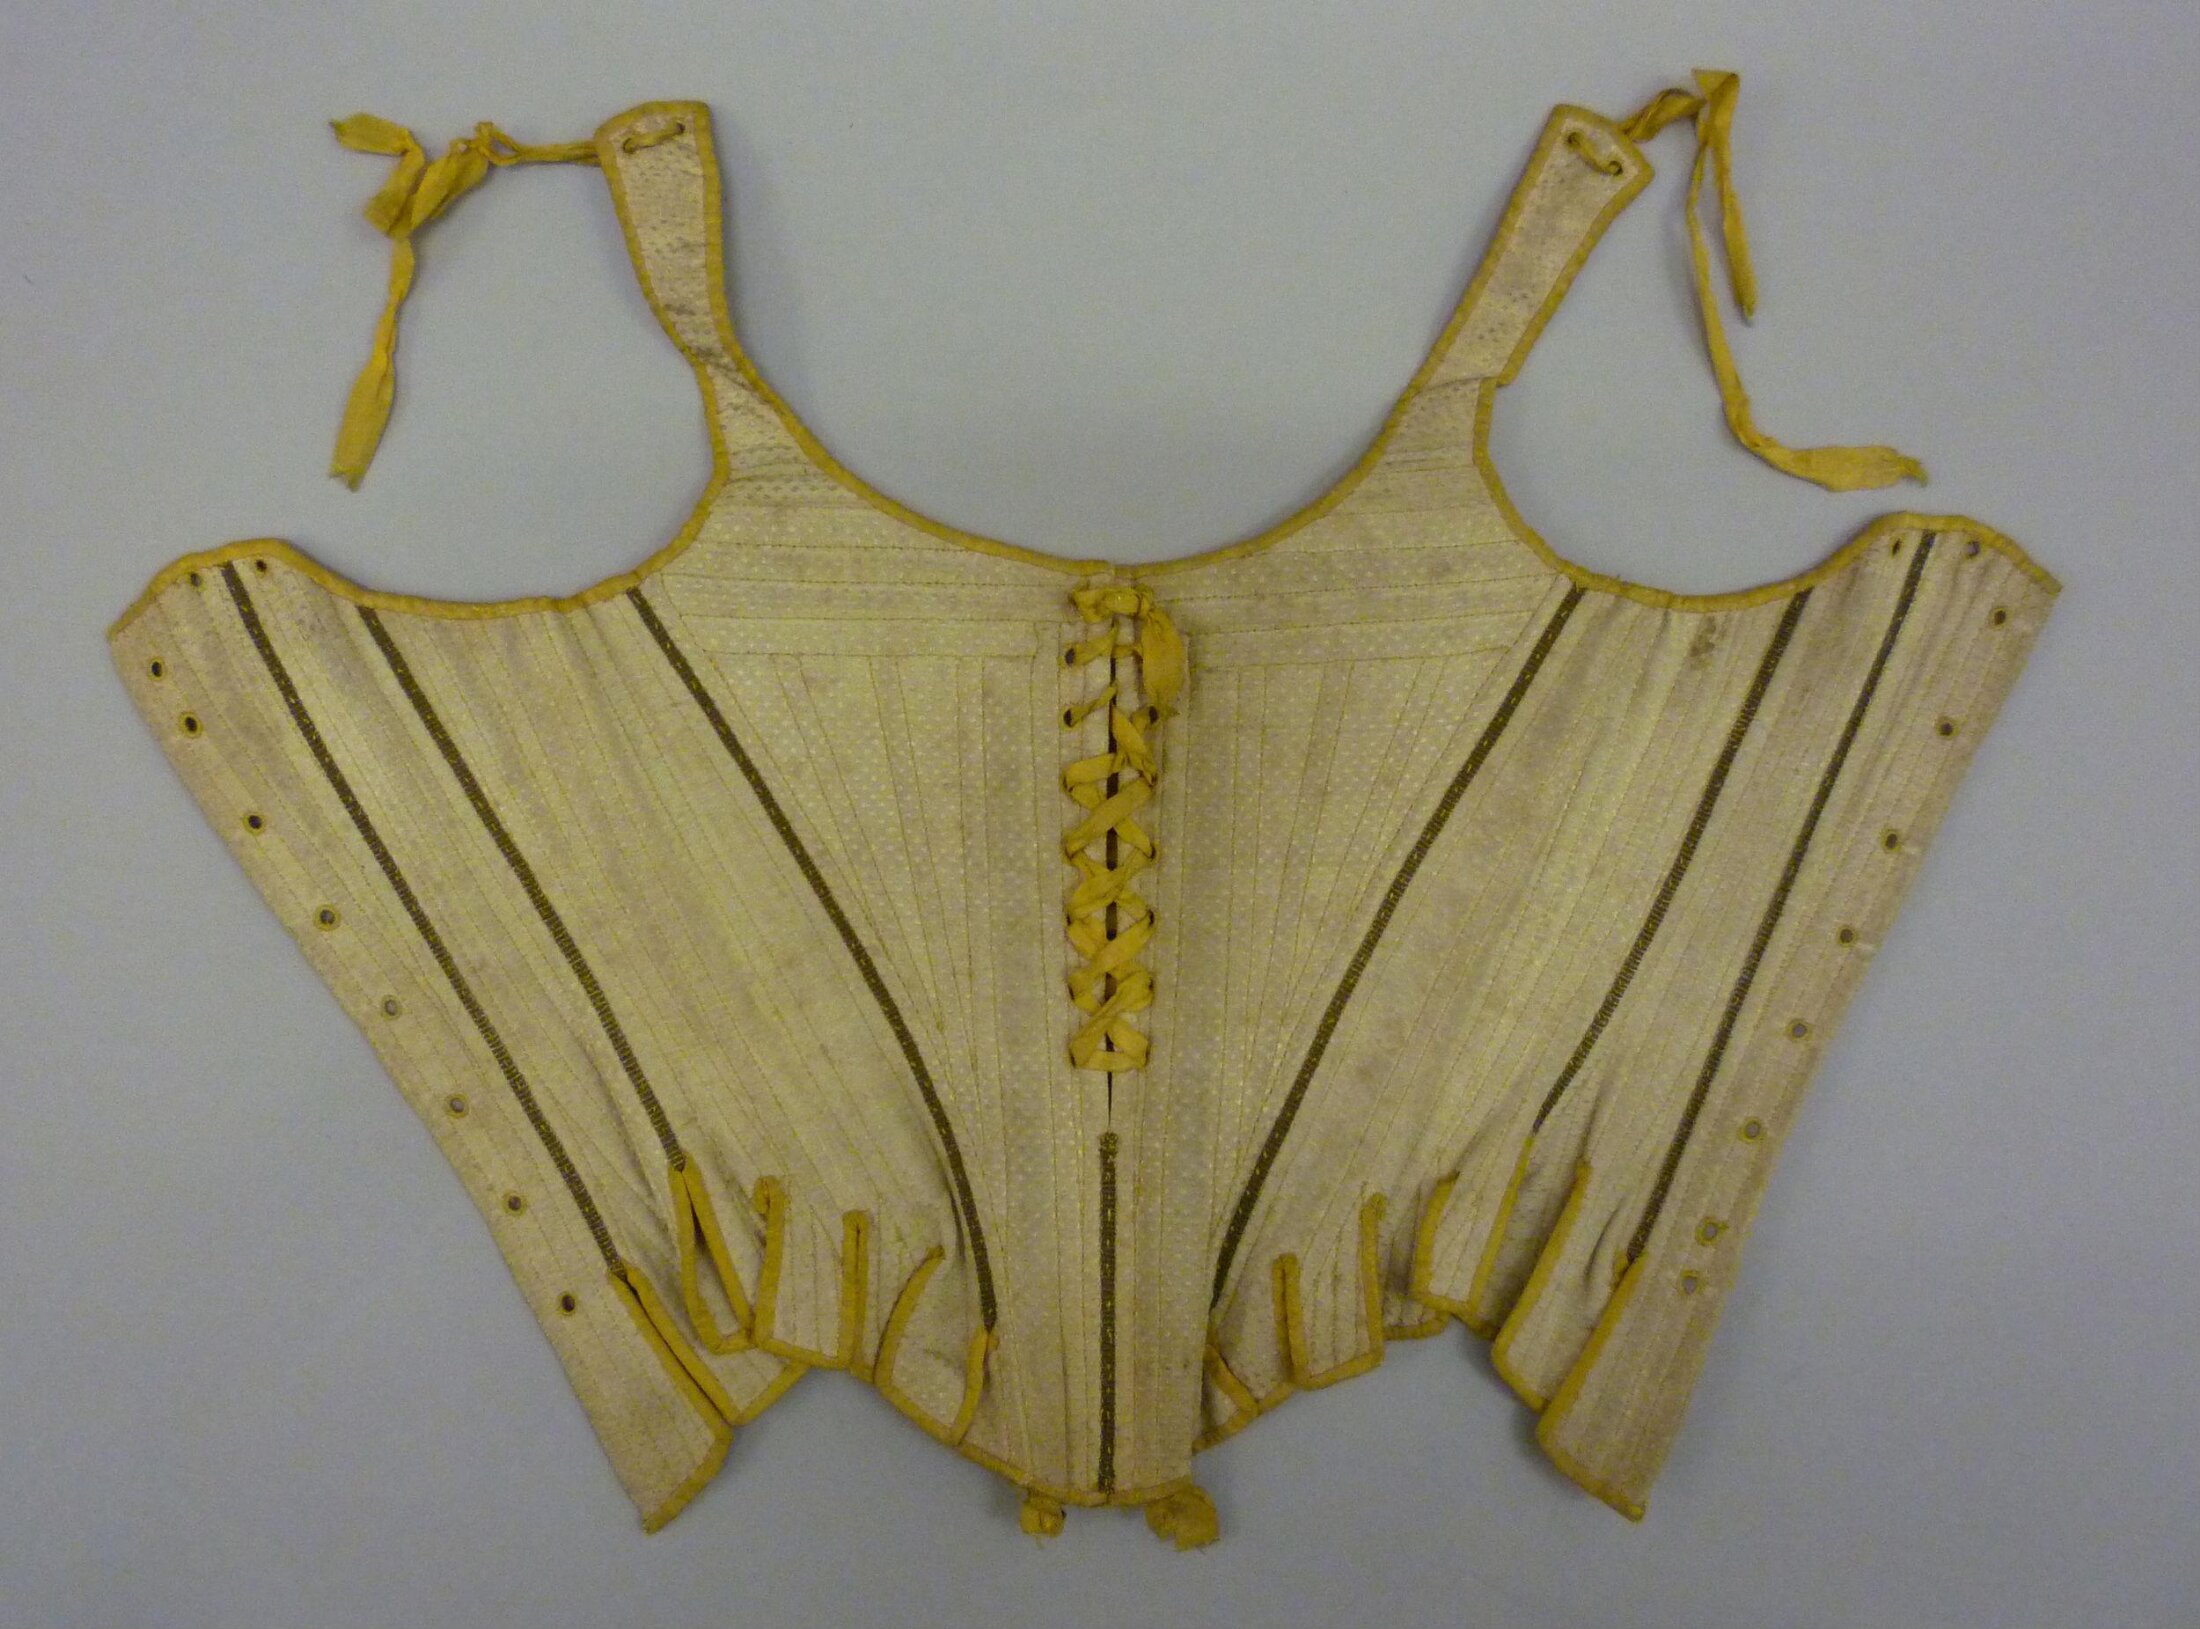 Woman's stays, 1770s, British; ivory figured silk, yellow silk trim, sample or apprentice piece, V&A T910.1913